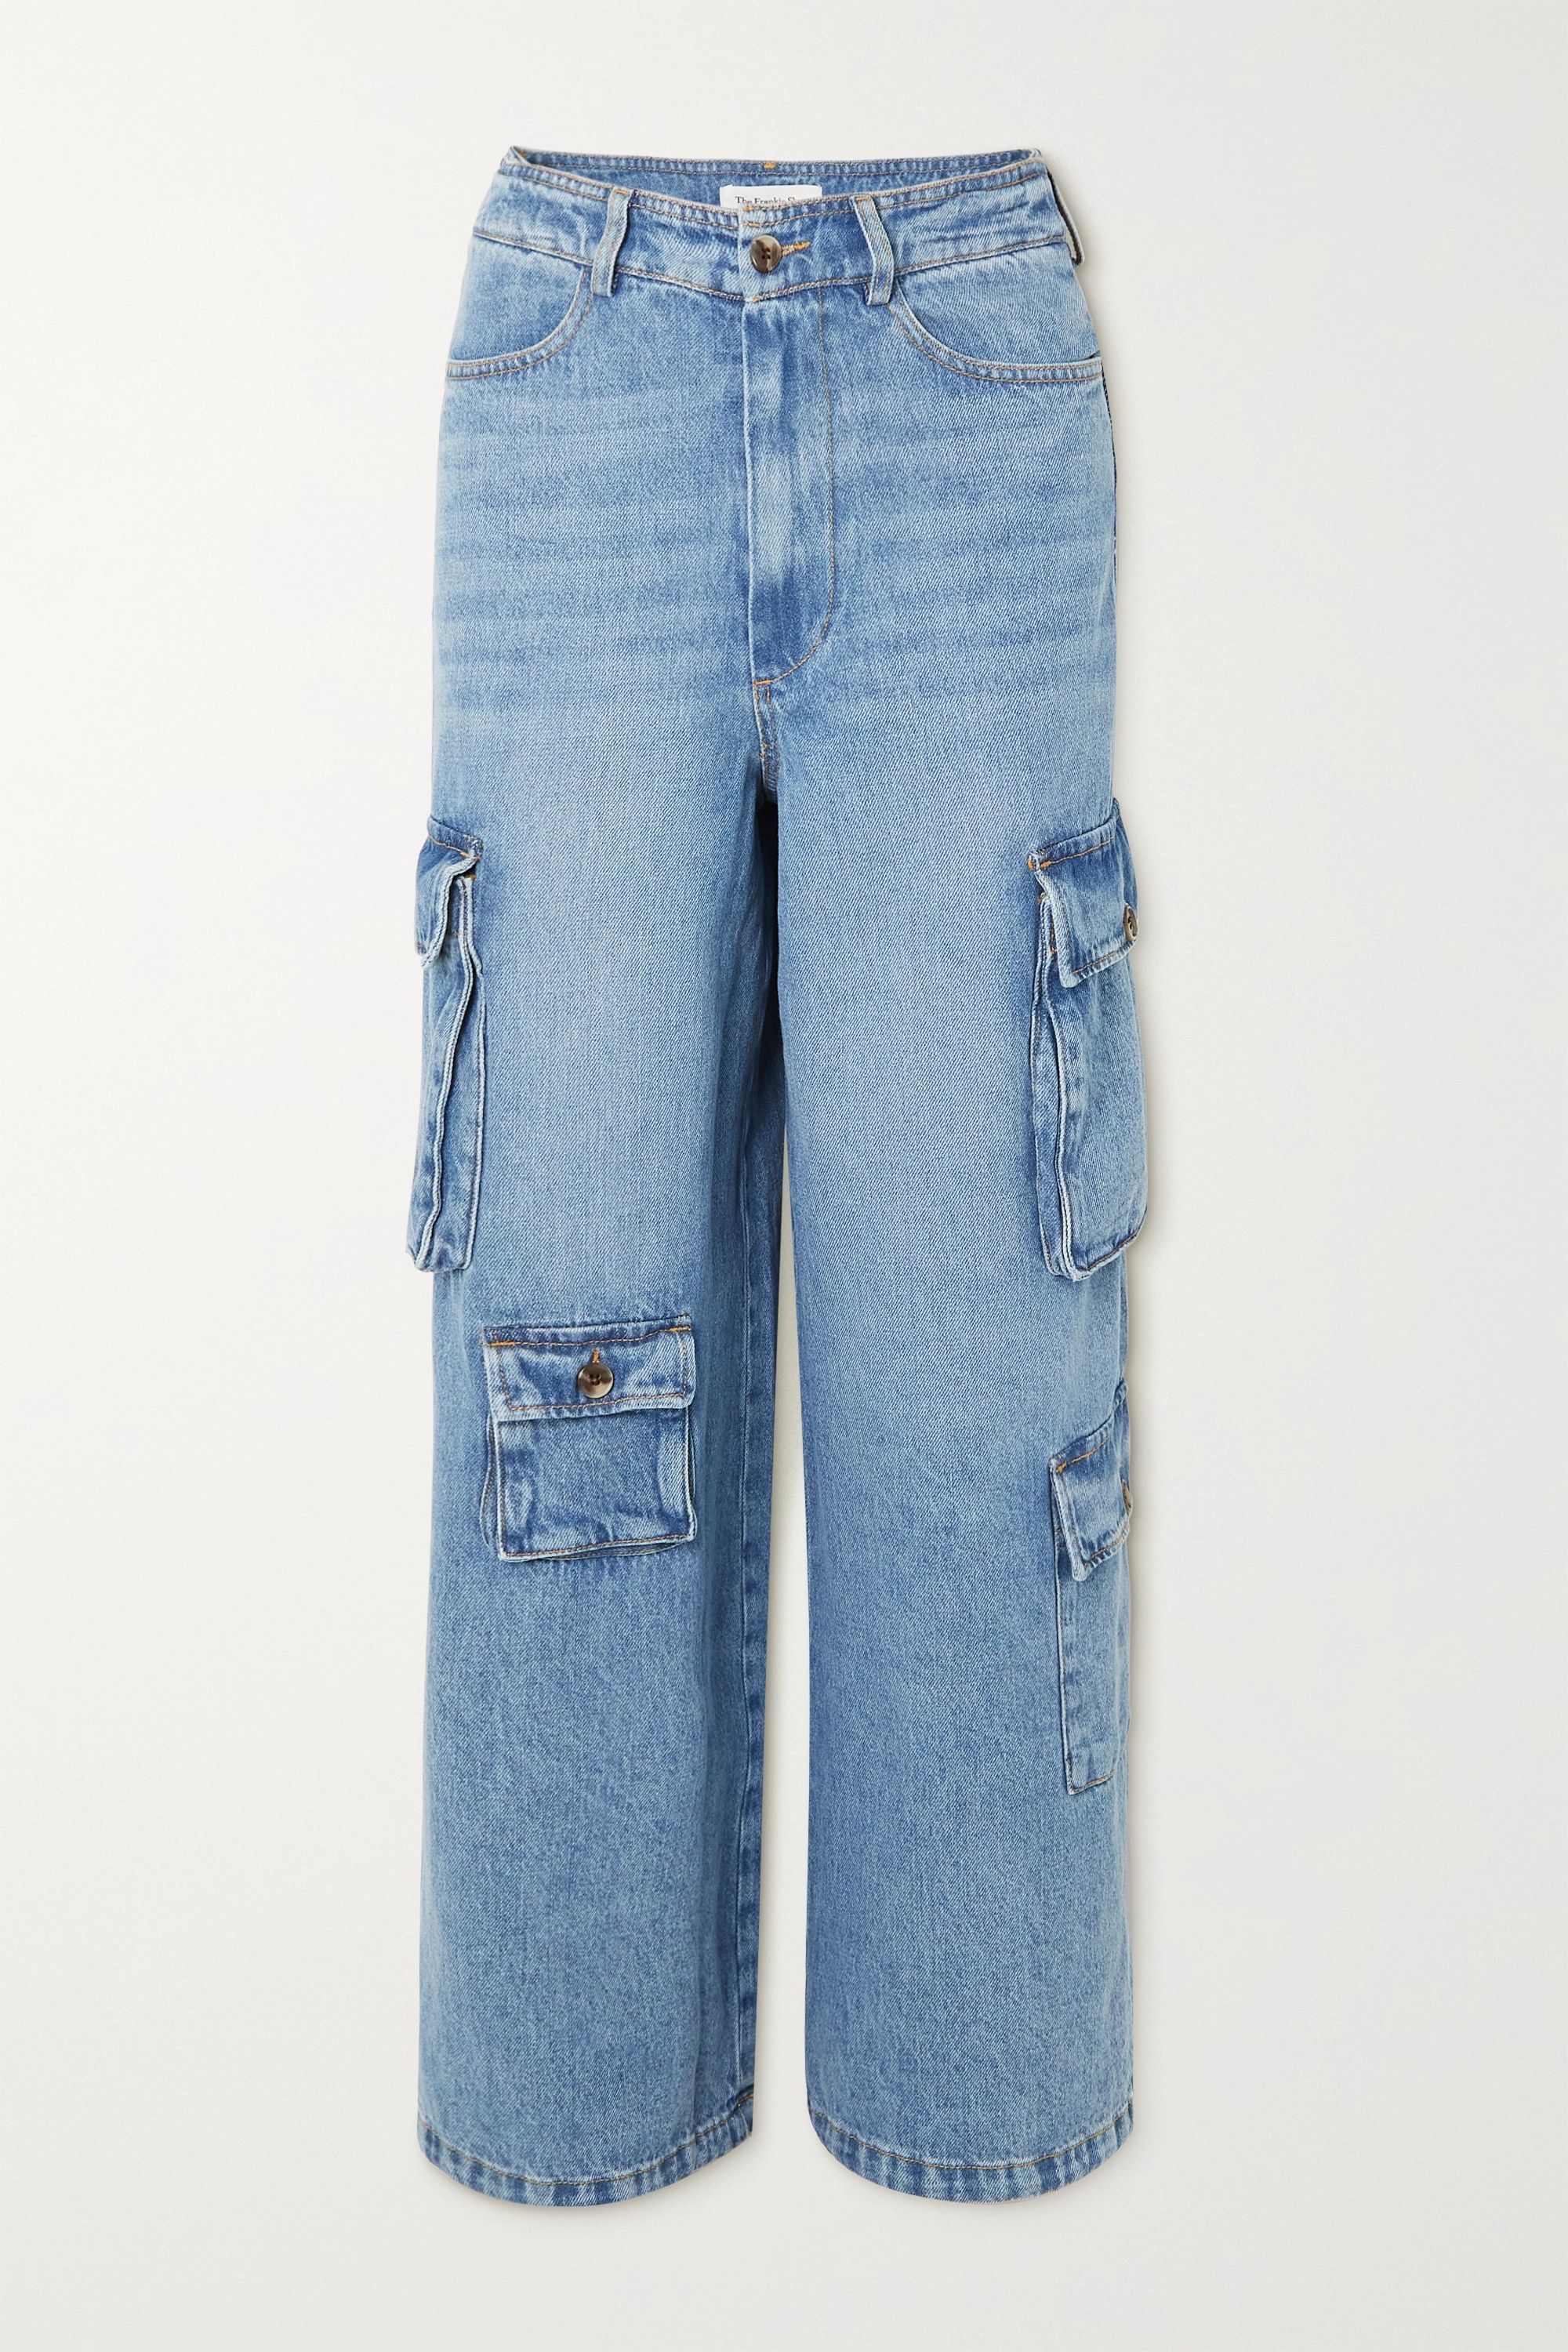 PKOGF New Jeans For Women Slim Fit Straigth Gray High Waist Denim Pants  Casual Loose Eelastic Saist Harem Jeans Trousers | Lazada